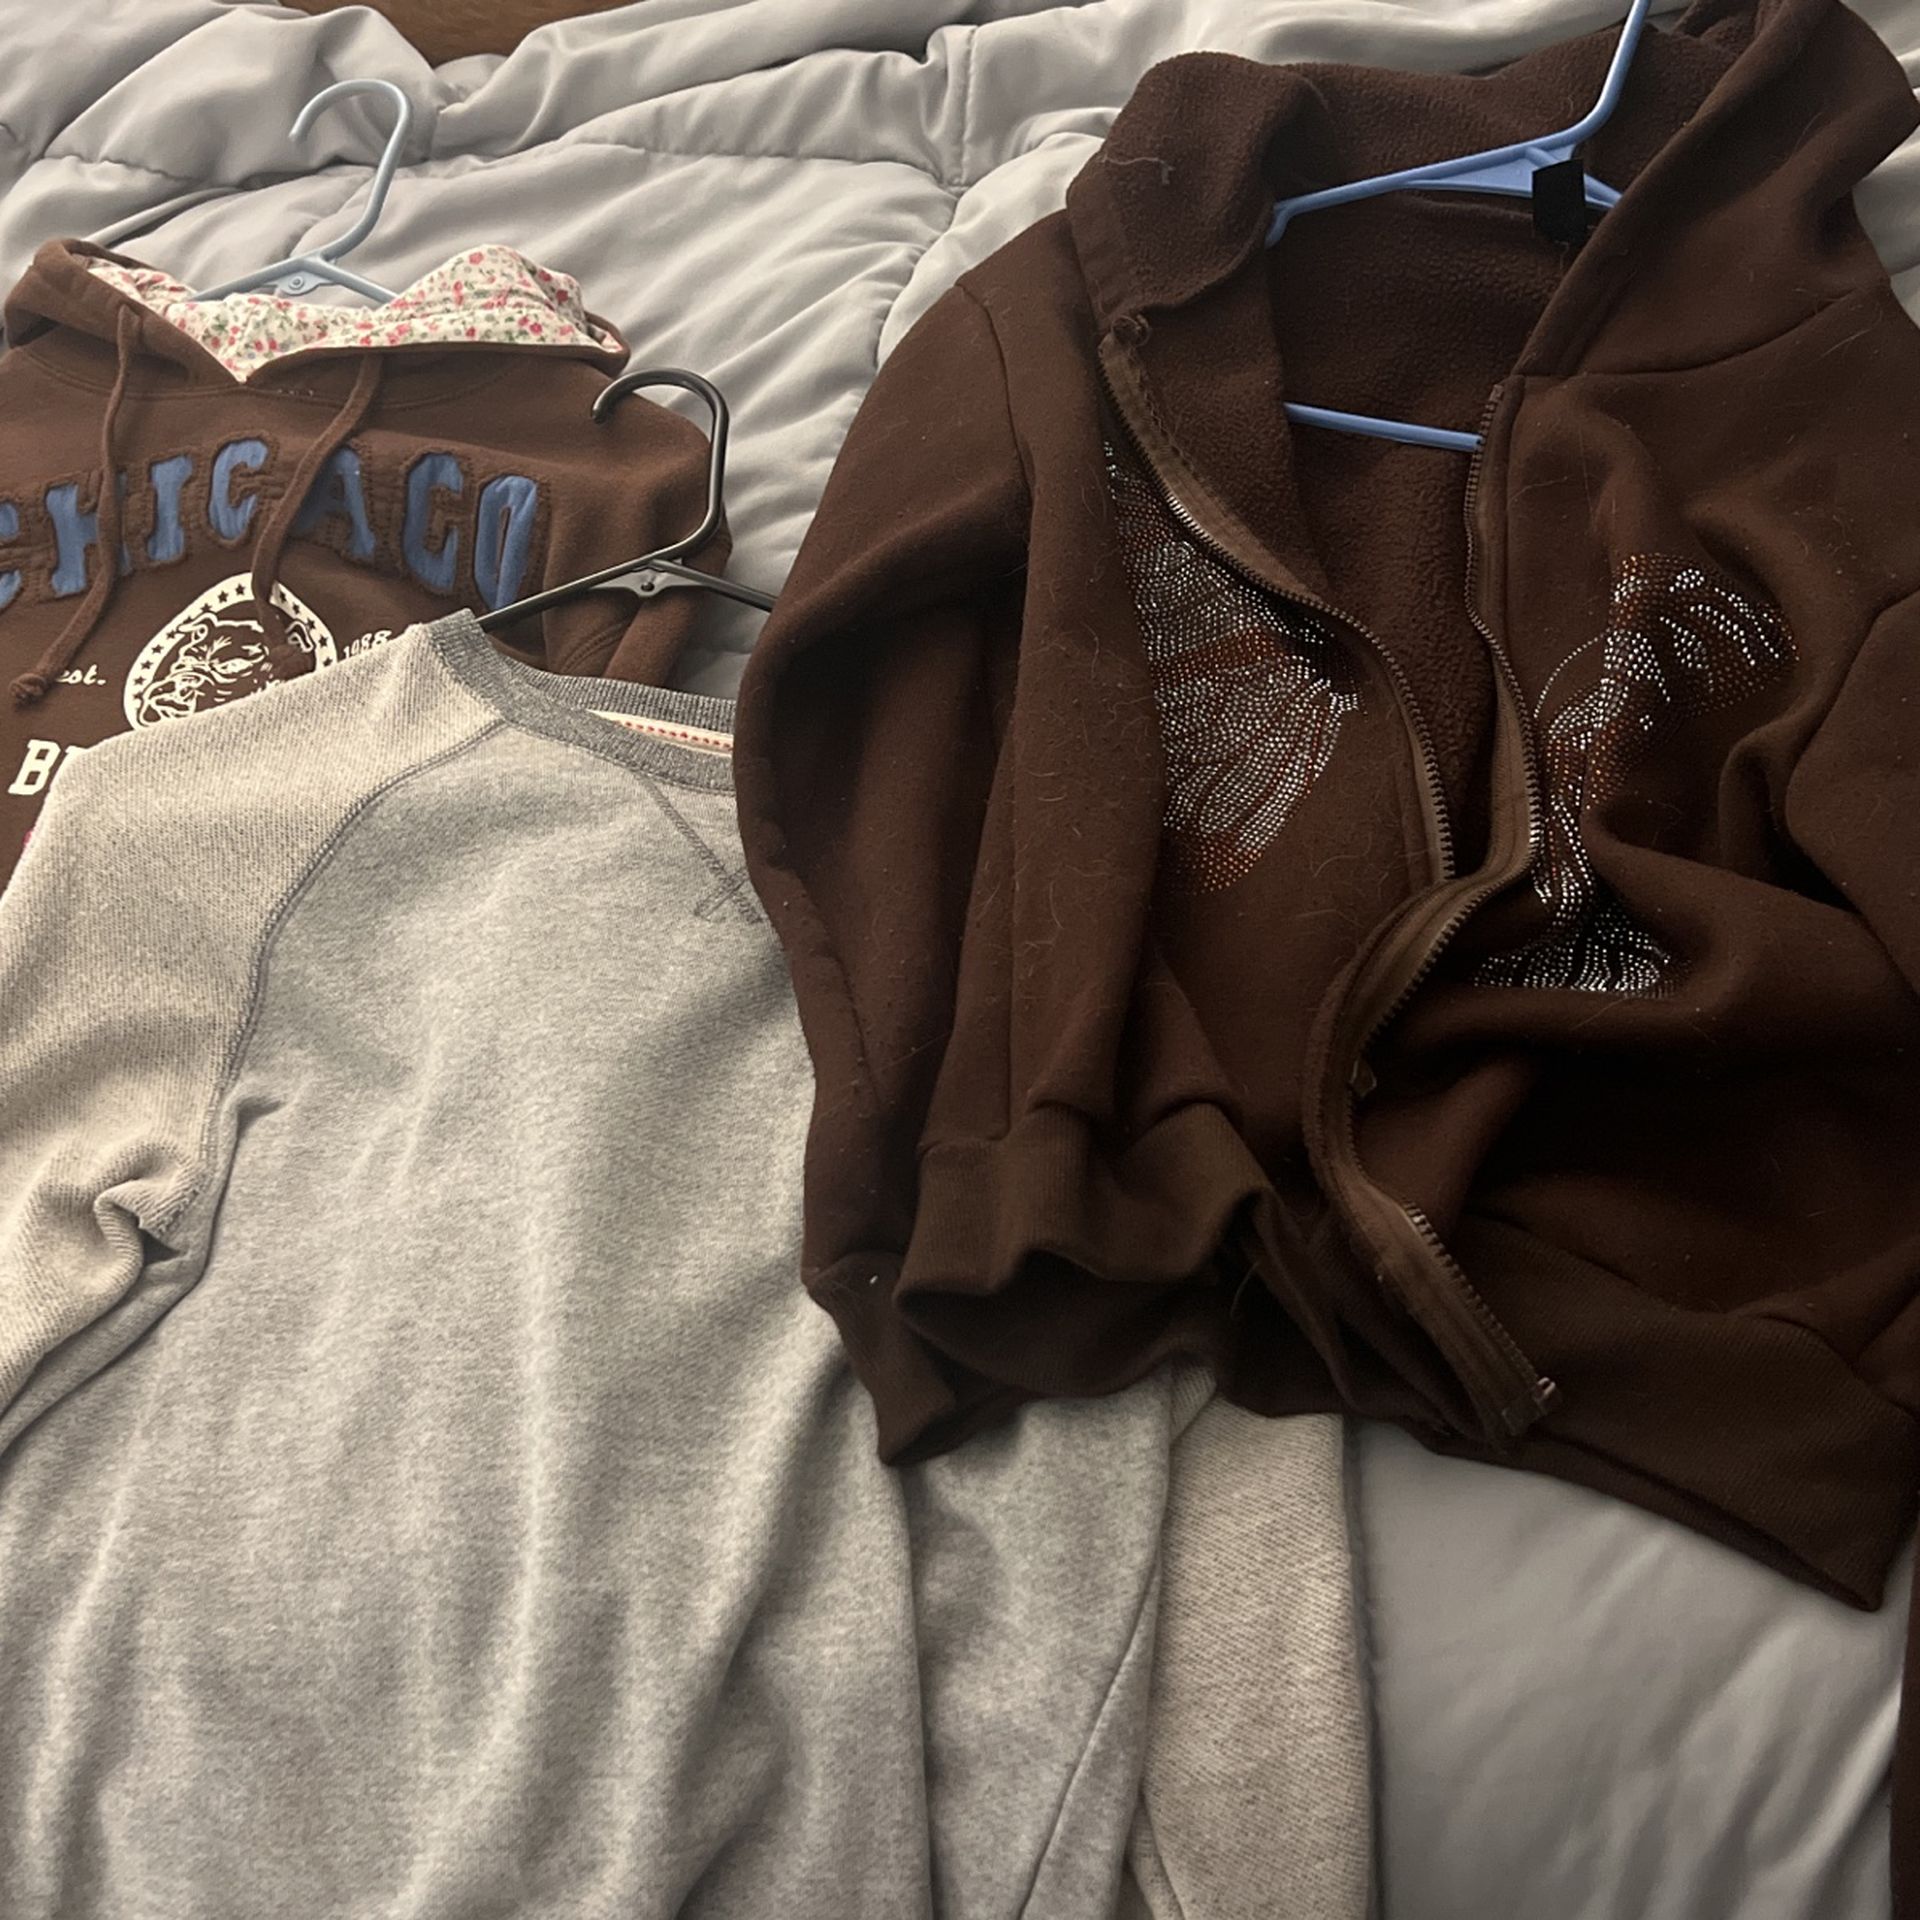 3 Hoodies/sweatshirts For $10